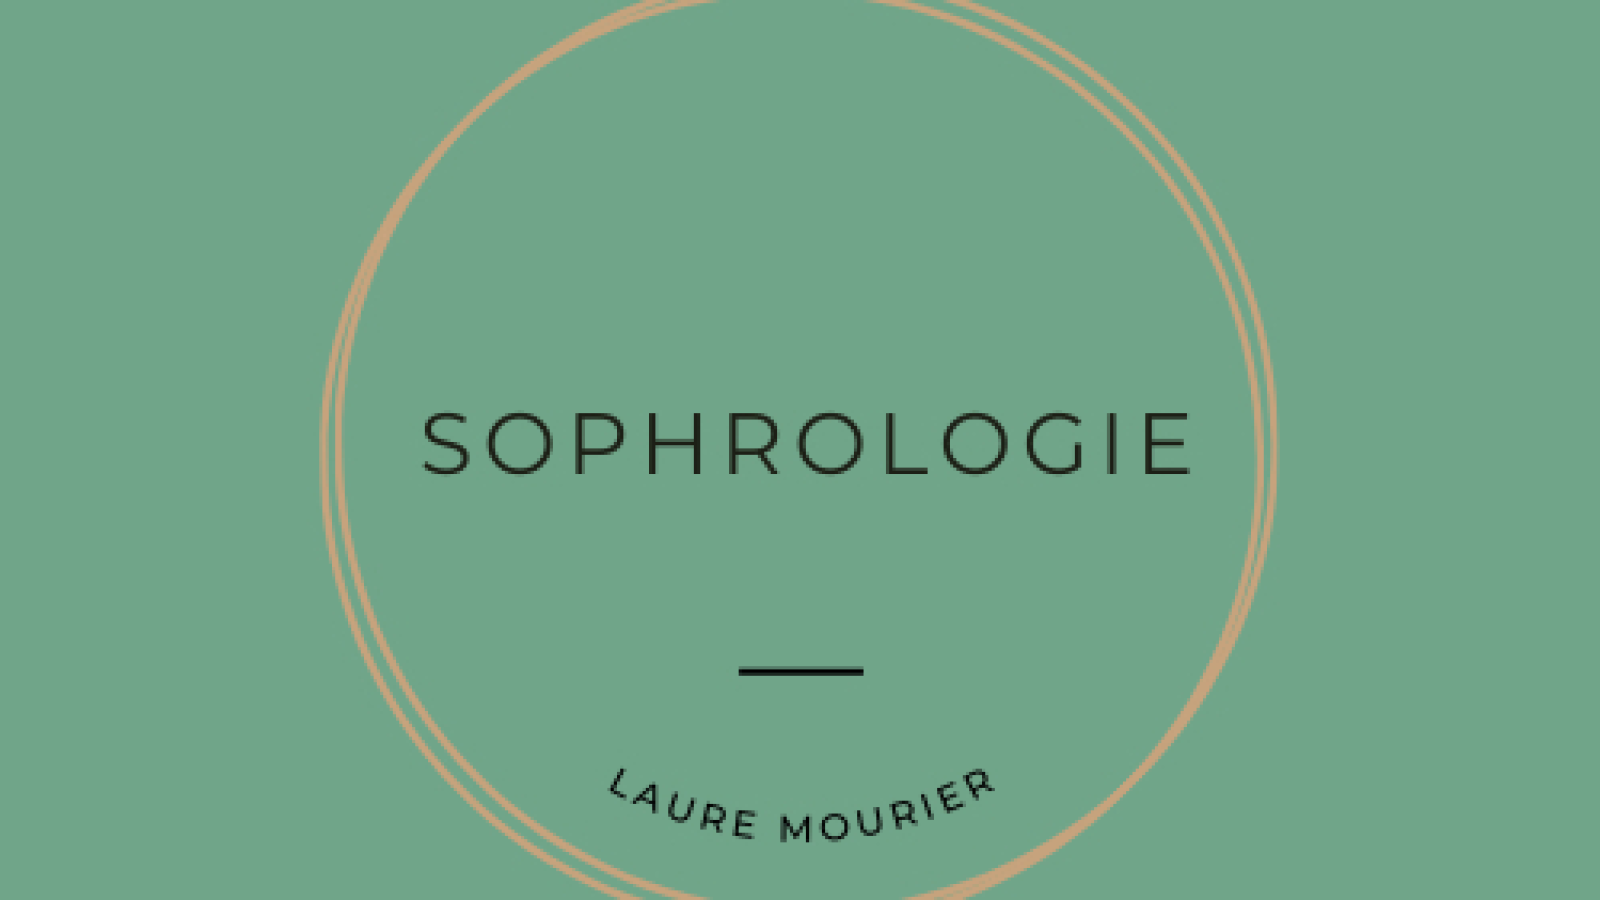 Laure Mourier Sophrologue